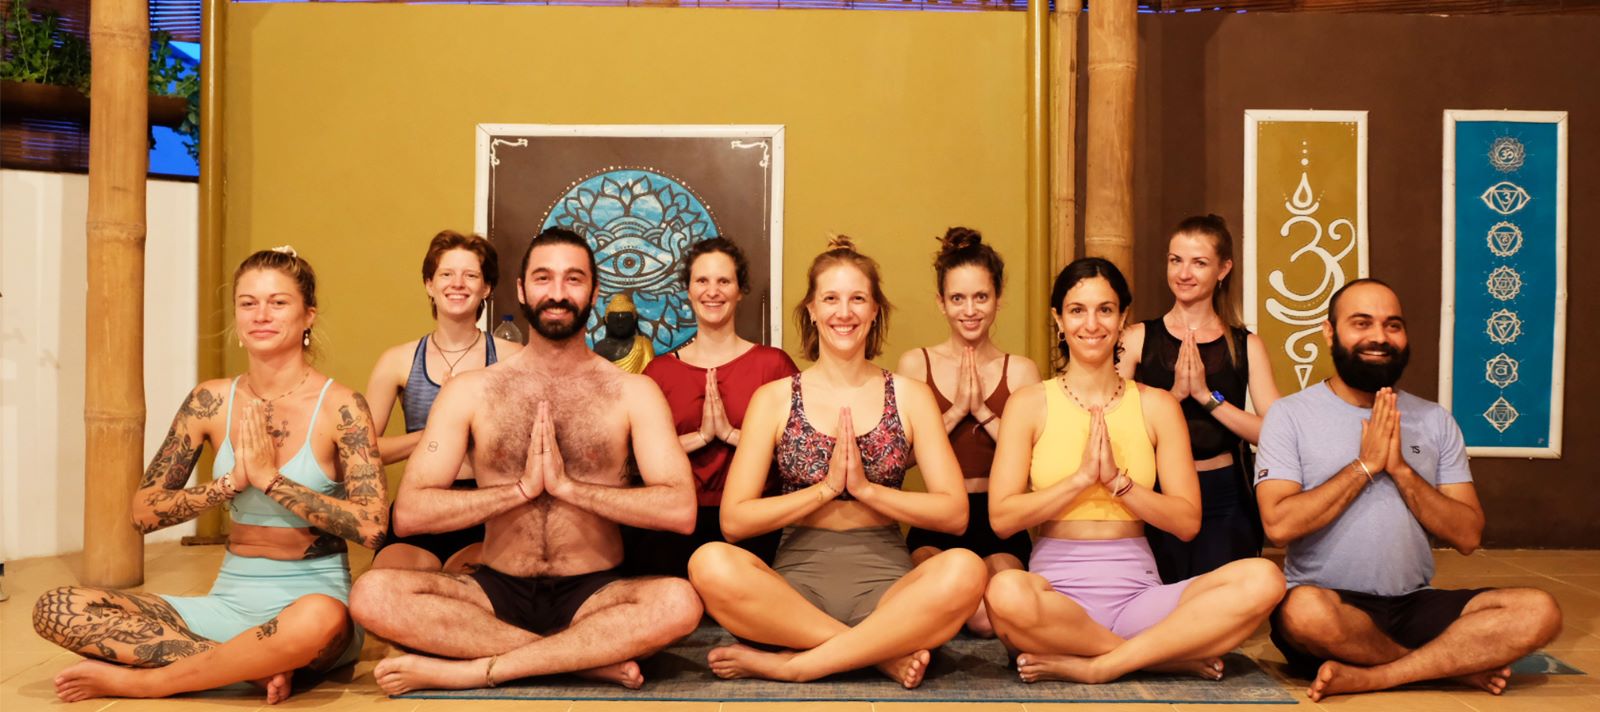 chaturanga dandasana - Yoga Academy International